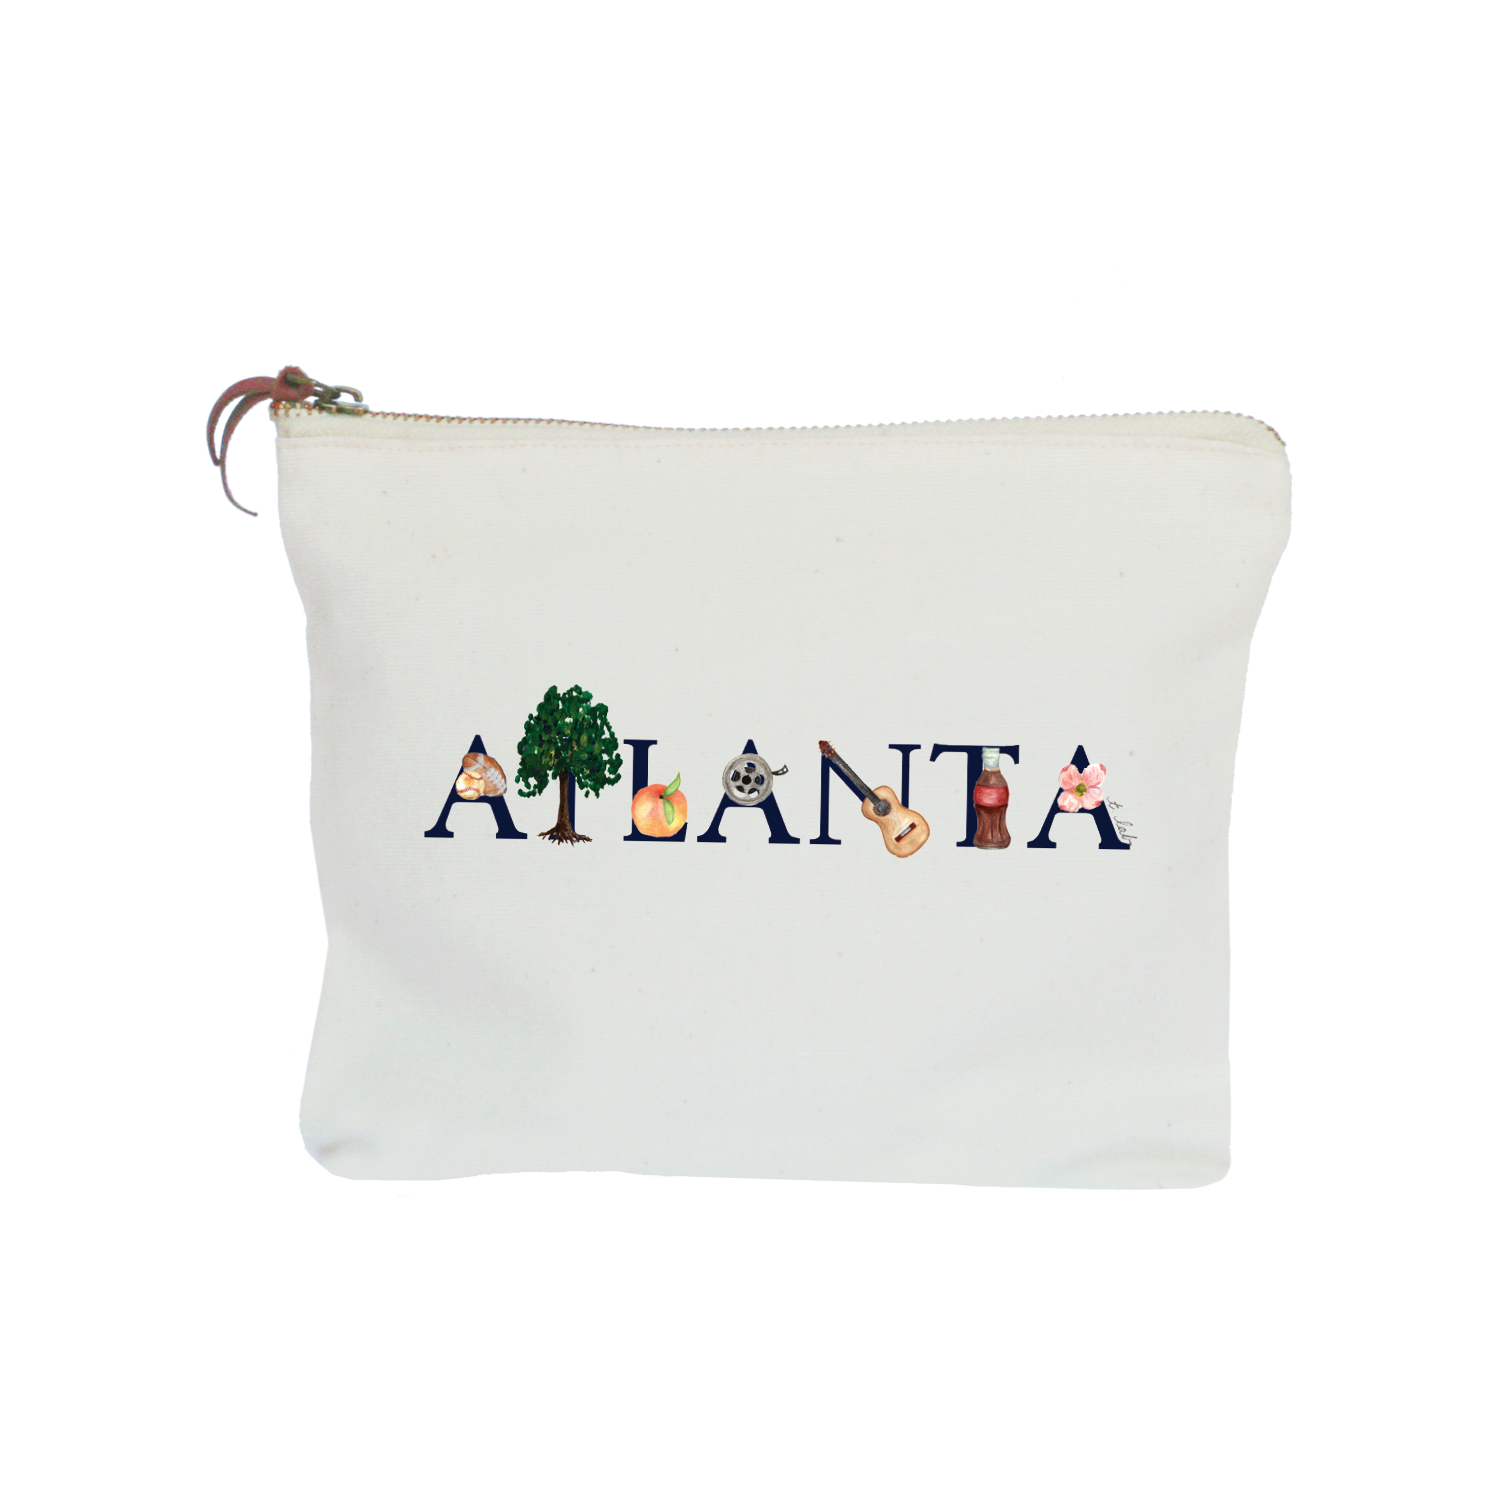 atlanta zipper pouch